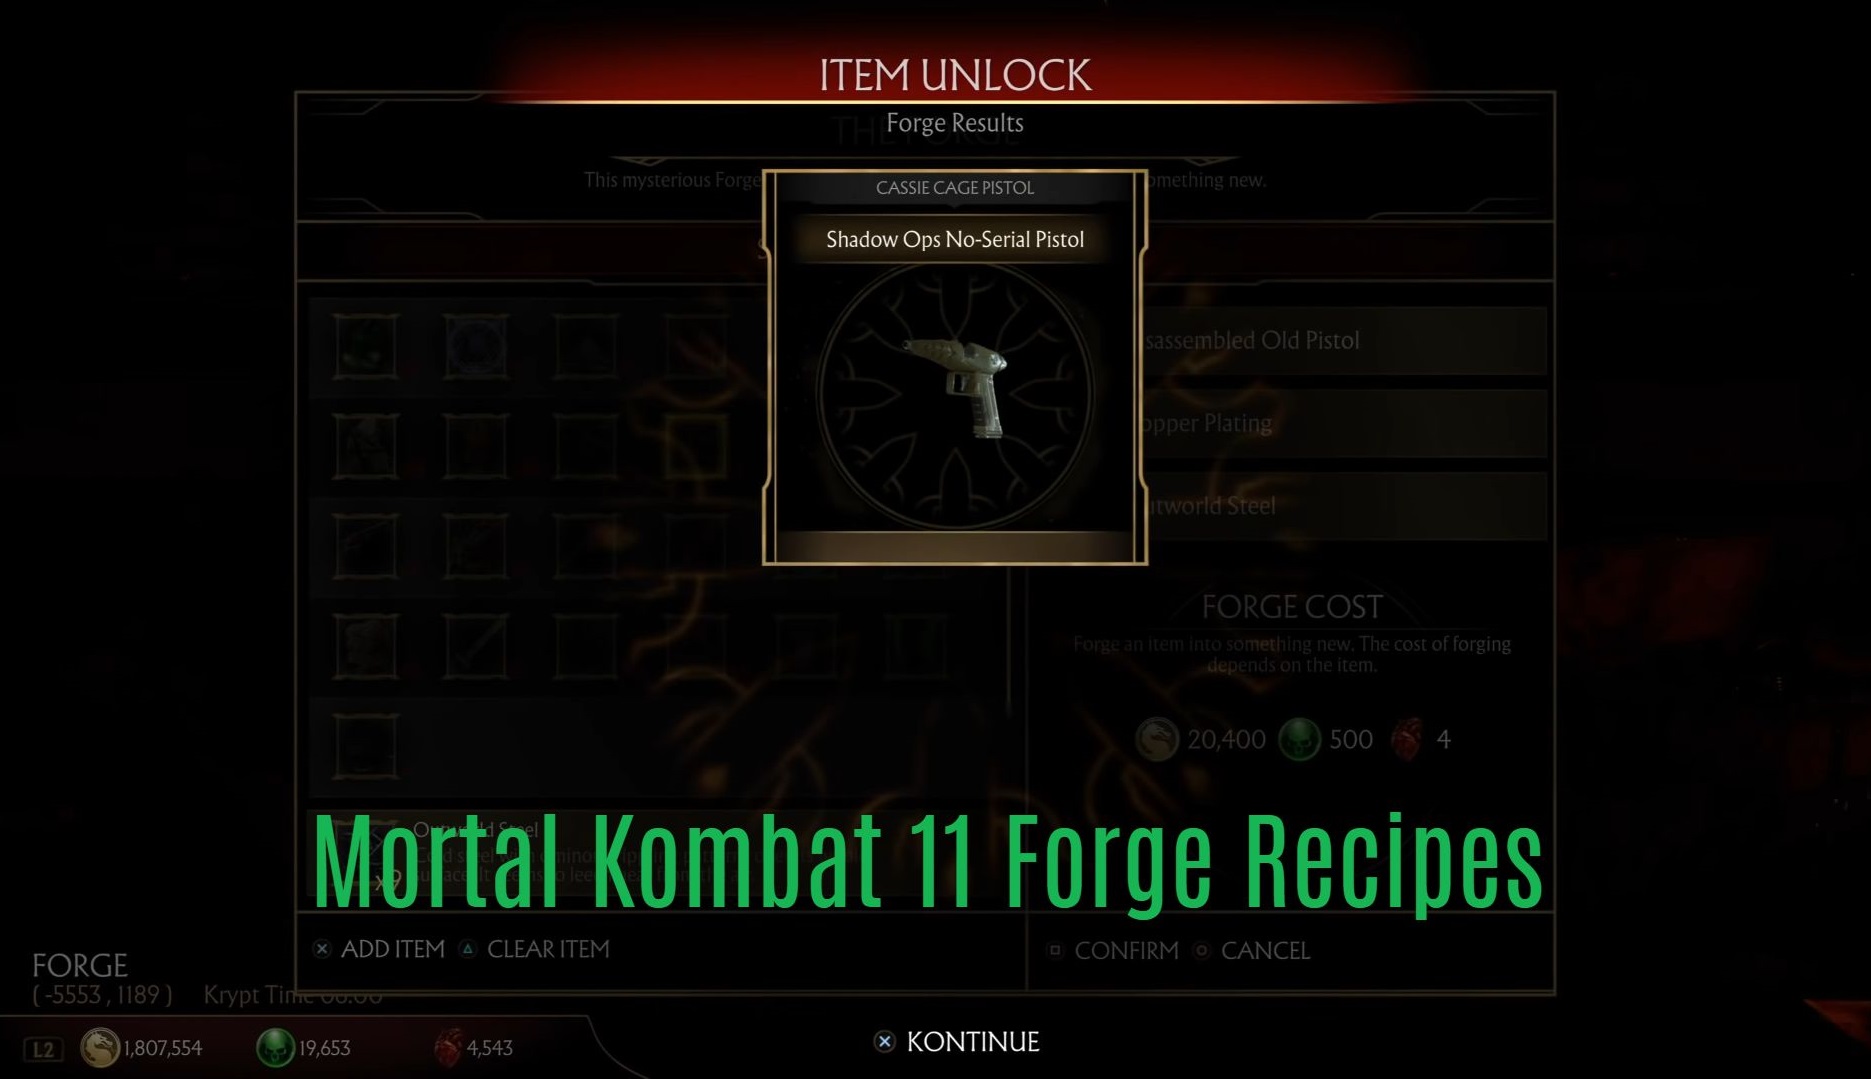 Mortal Kombat 11 Forge recipes